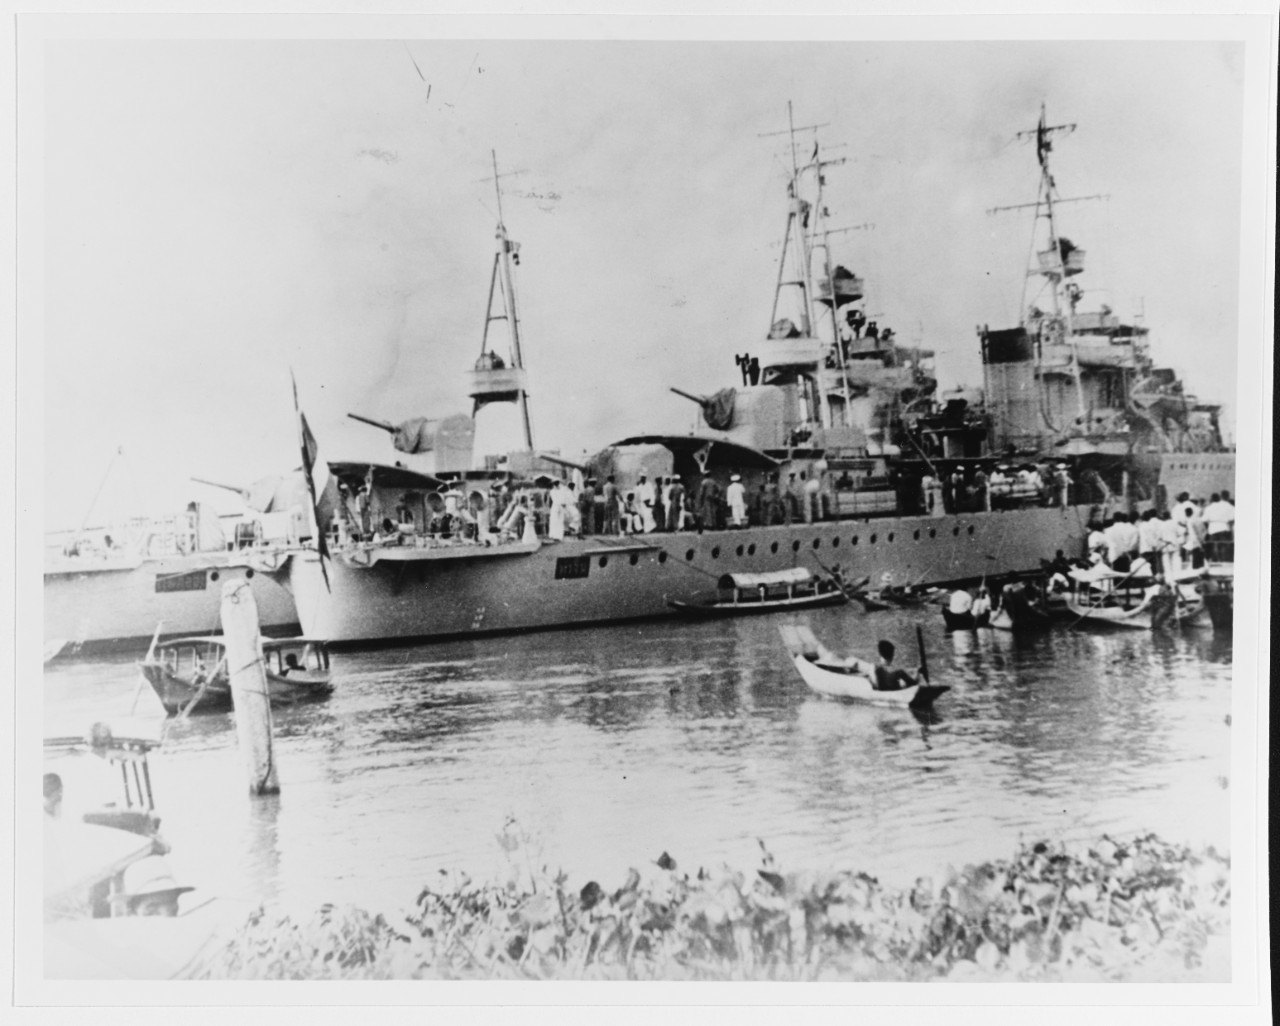 The Thai frigates TAHCHIN and MAEKLONG in Thai waters before World War II.